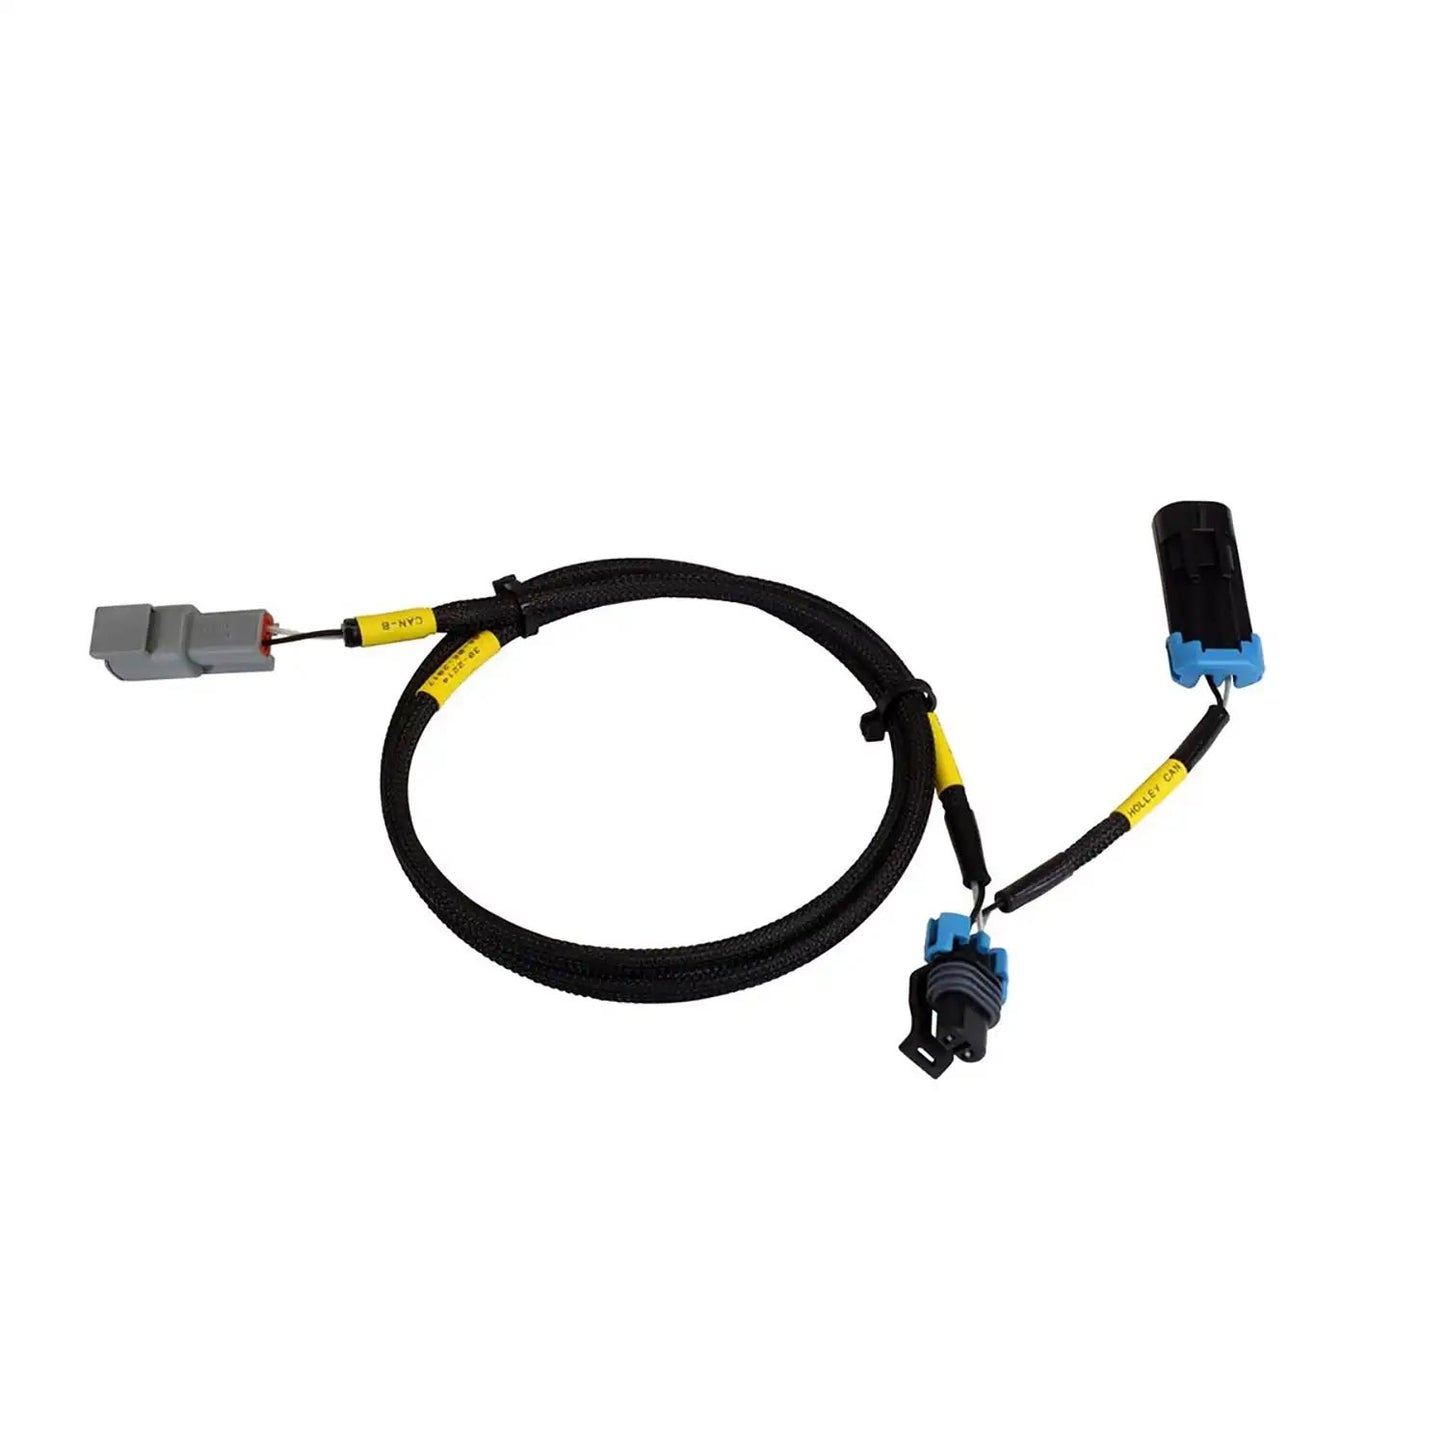 AEM Cd-5/7 Carbon Digital Dash Plug & Play Adapter Harness For Holley Efi